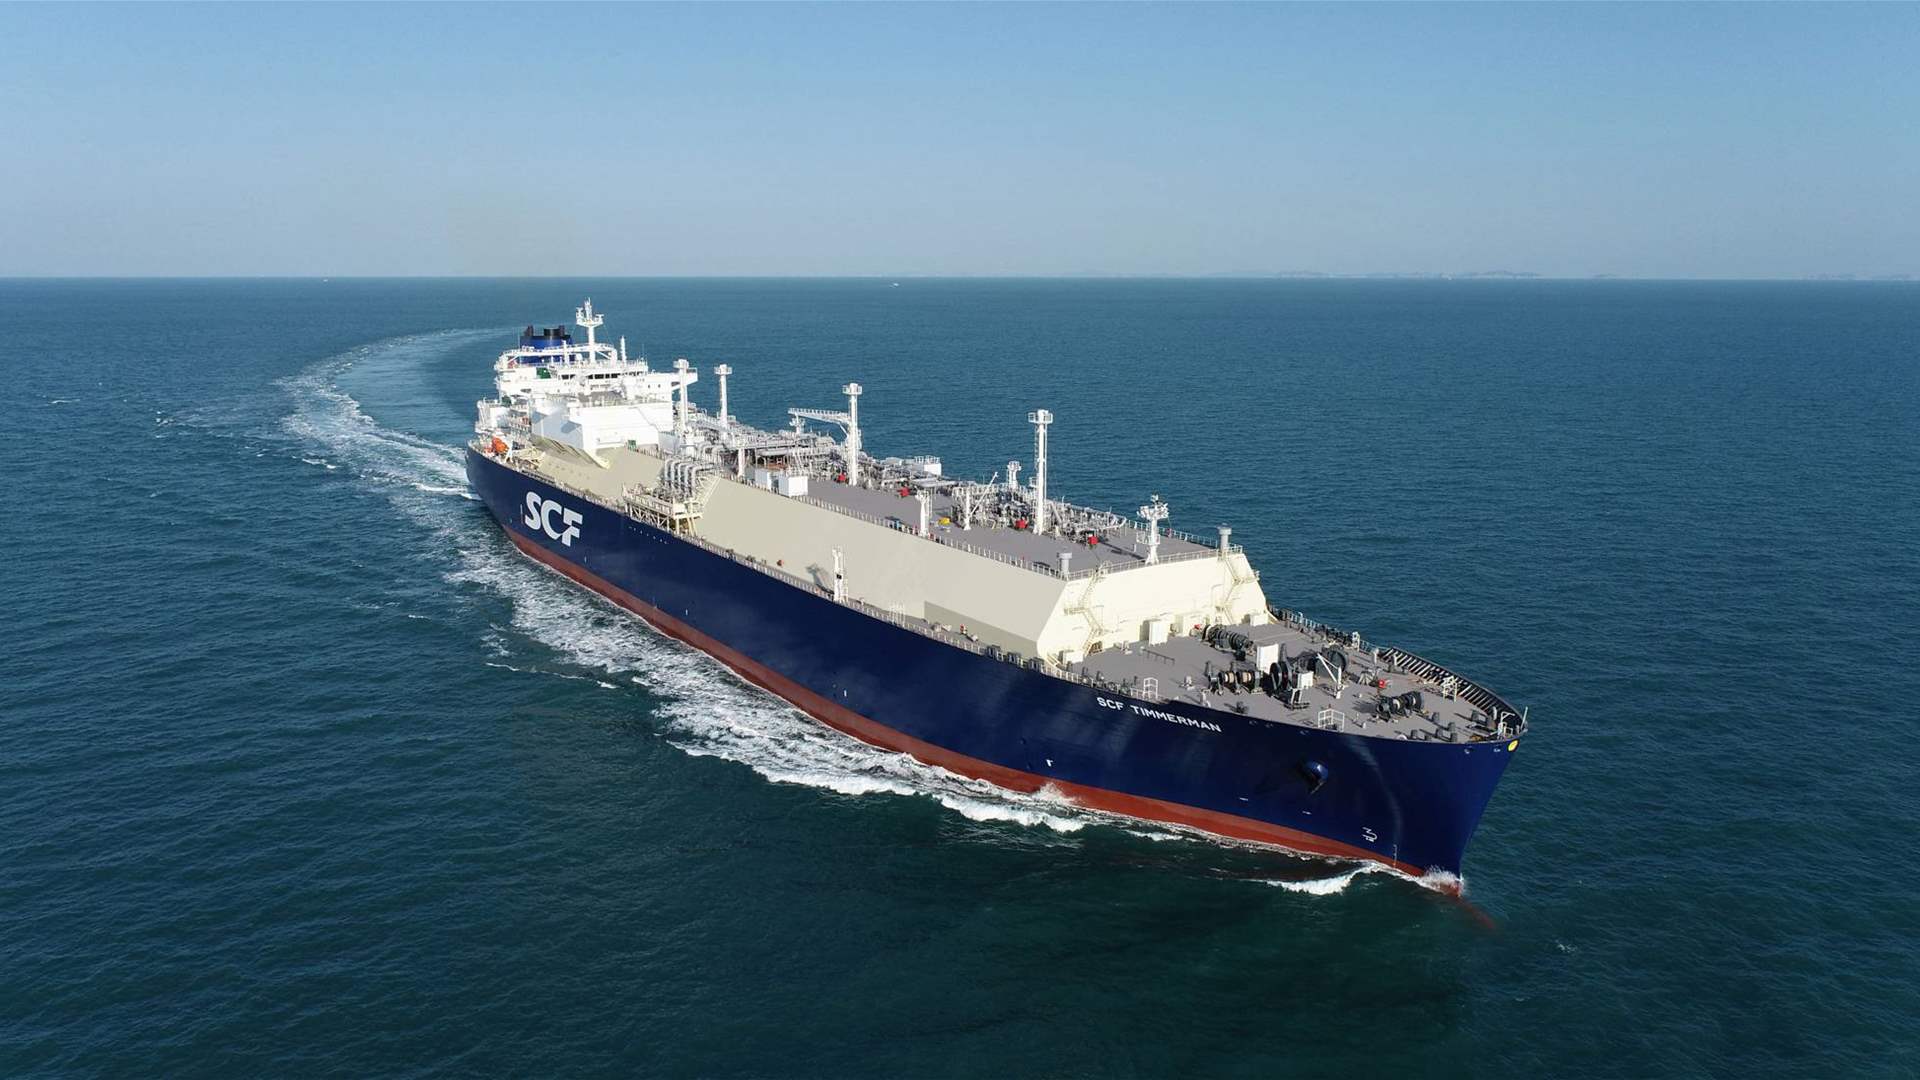 Sanctions damaging safety at sea, sanctioned ship group Sovcomflot says